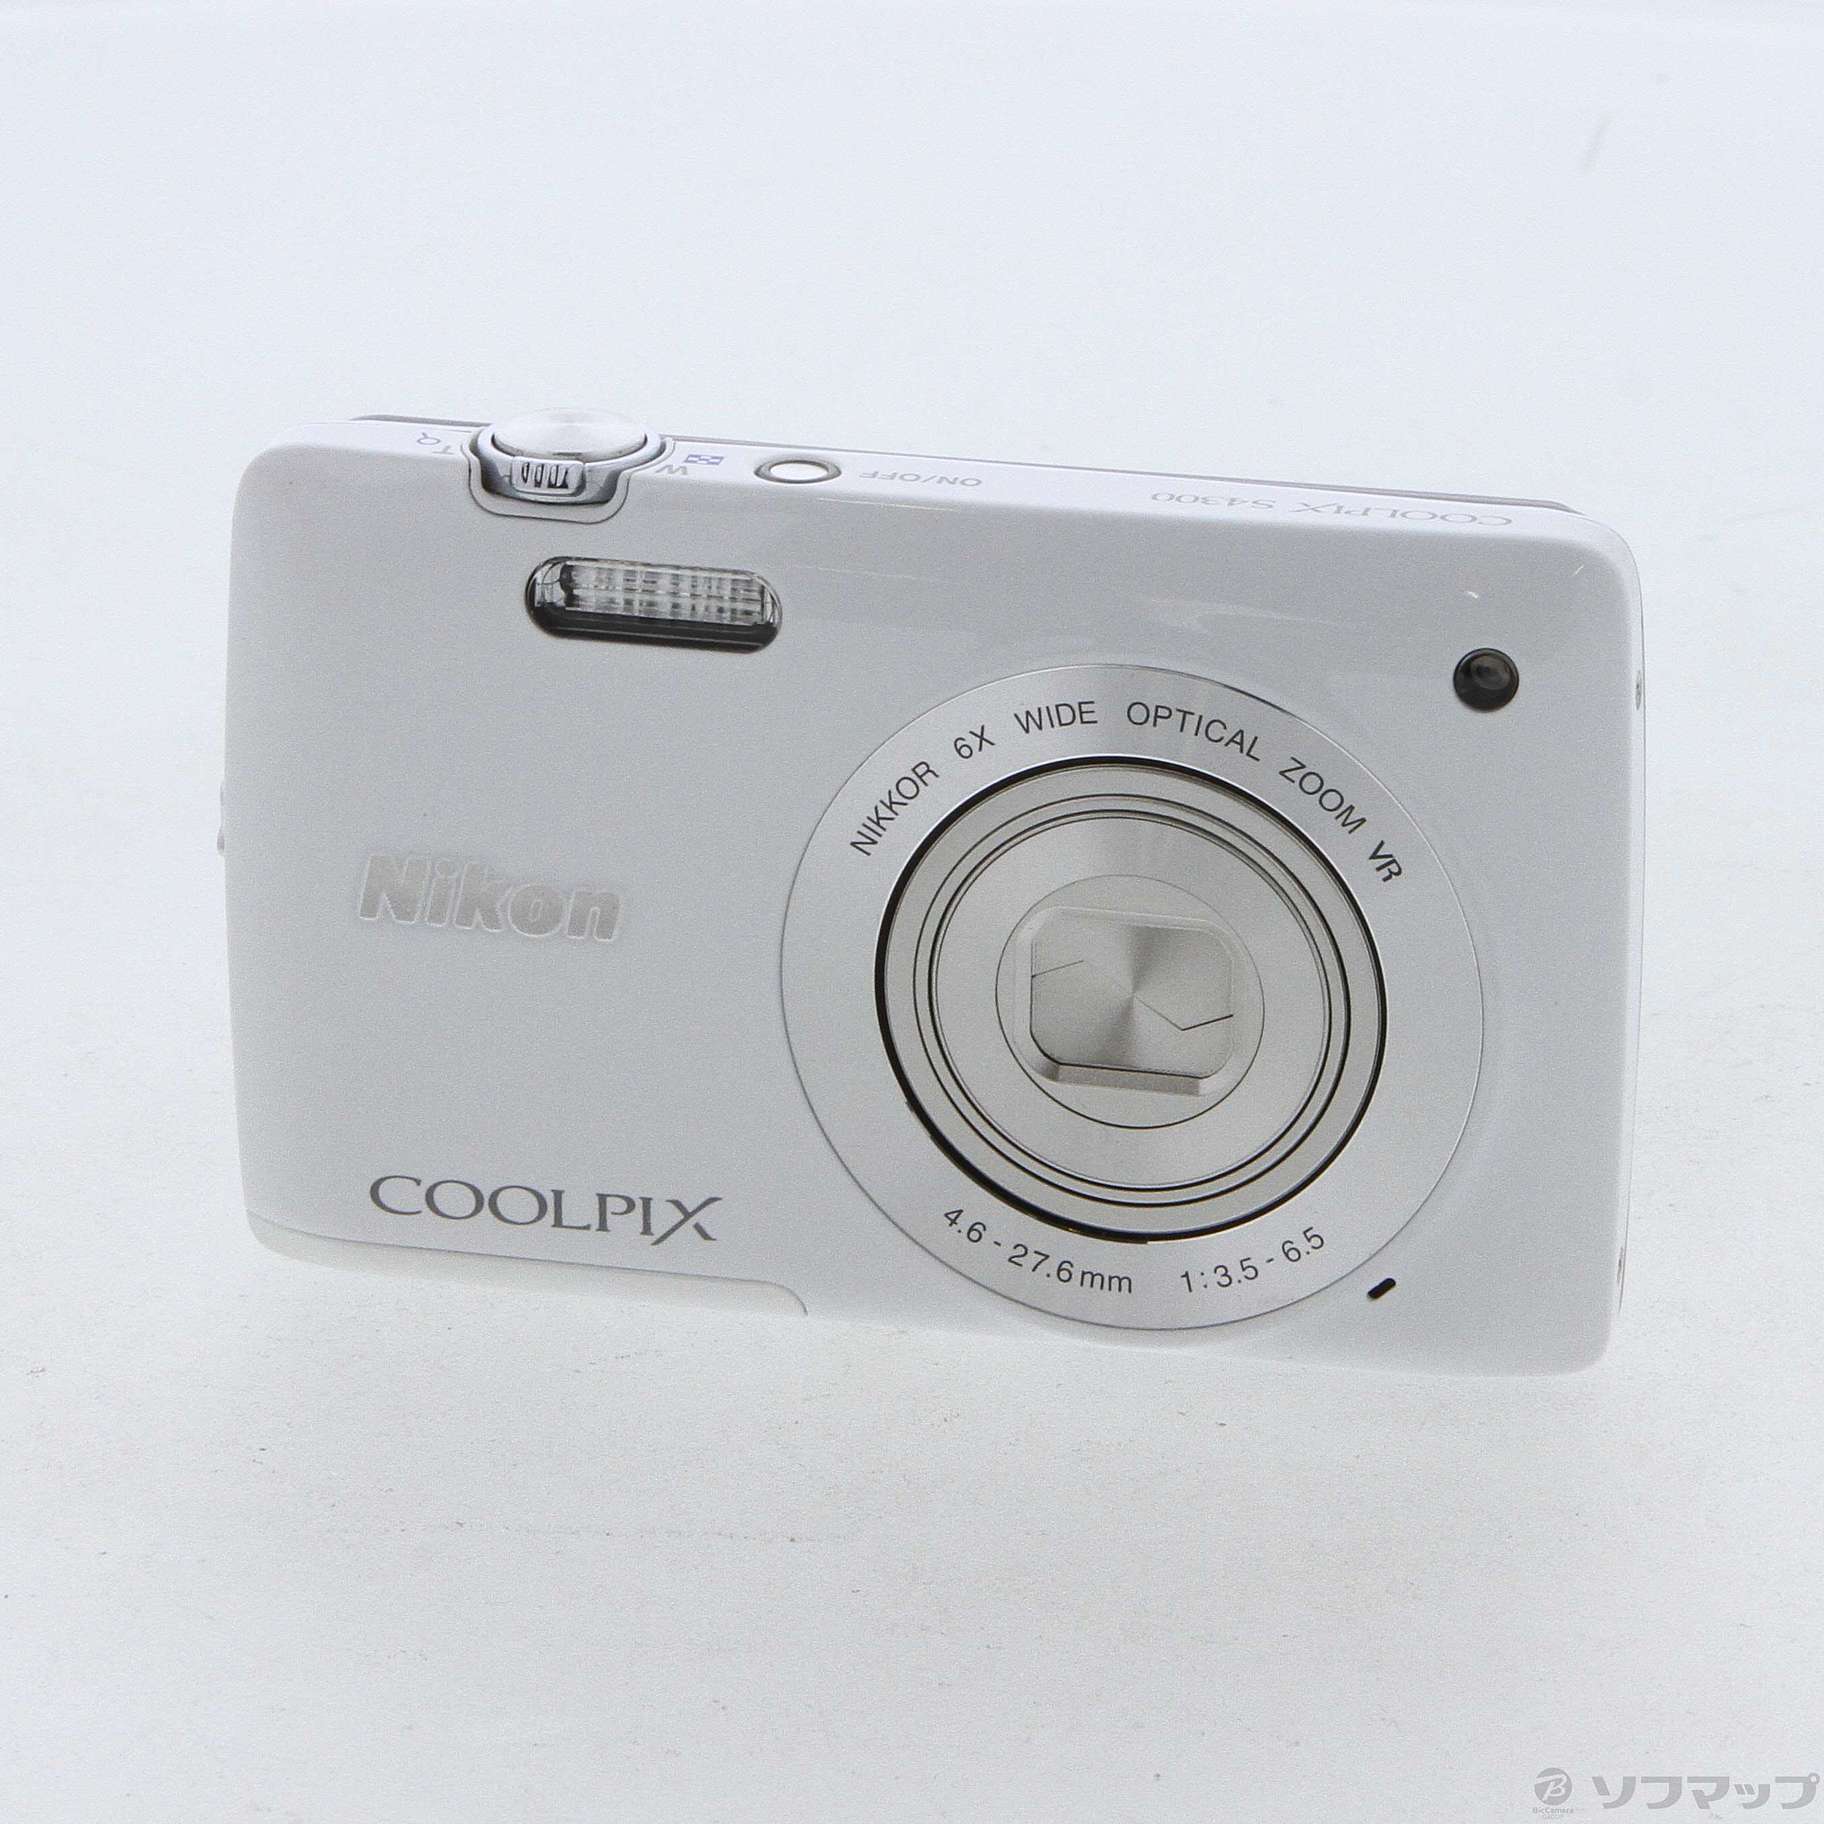 Nikon ニコン coolpix s4300 - デジタルカメラ